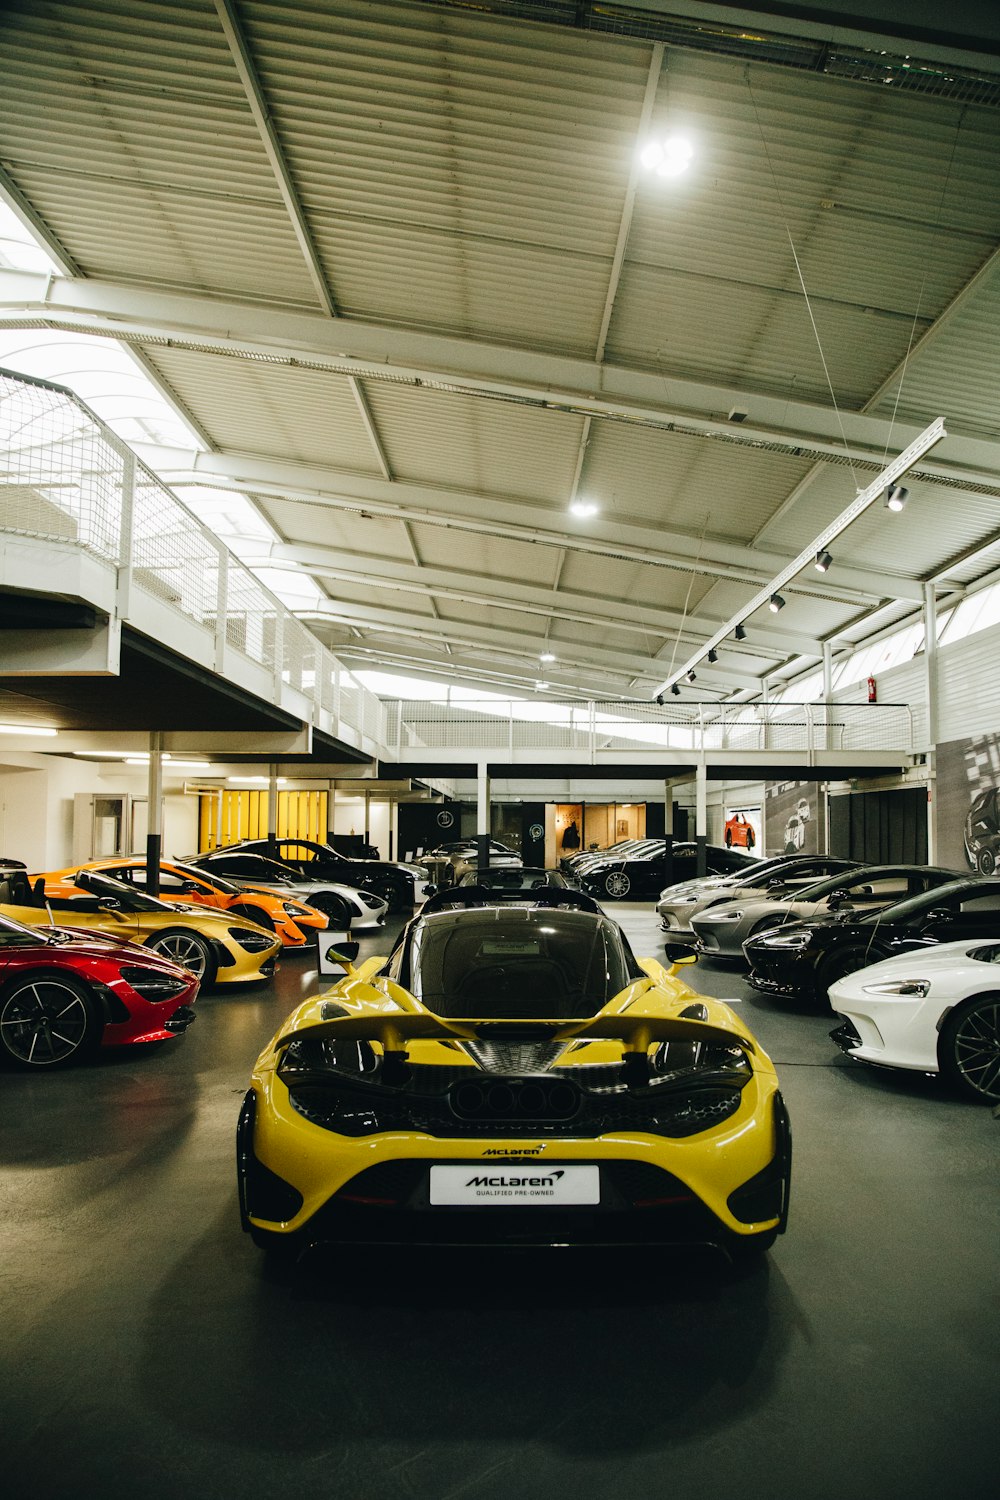 Un montón de coches están aparcados en un garaje